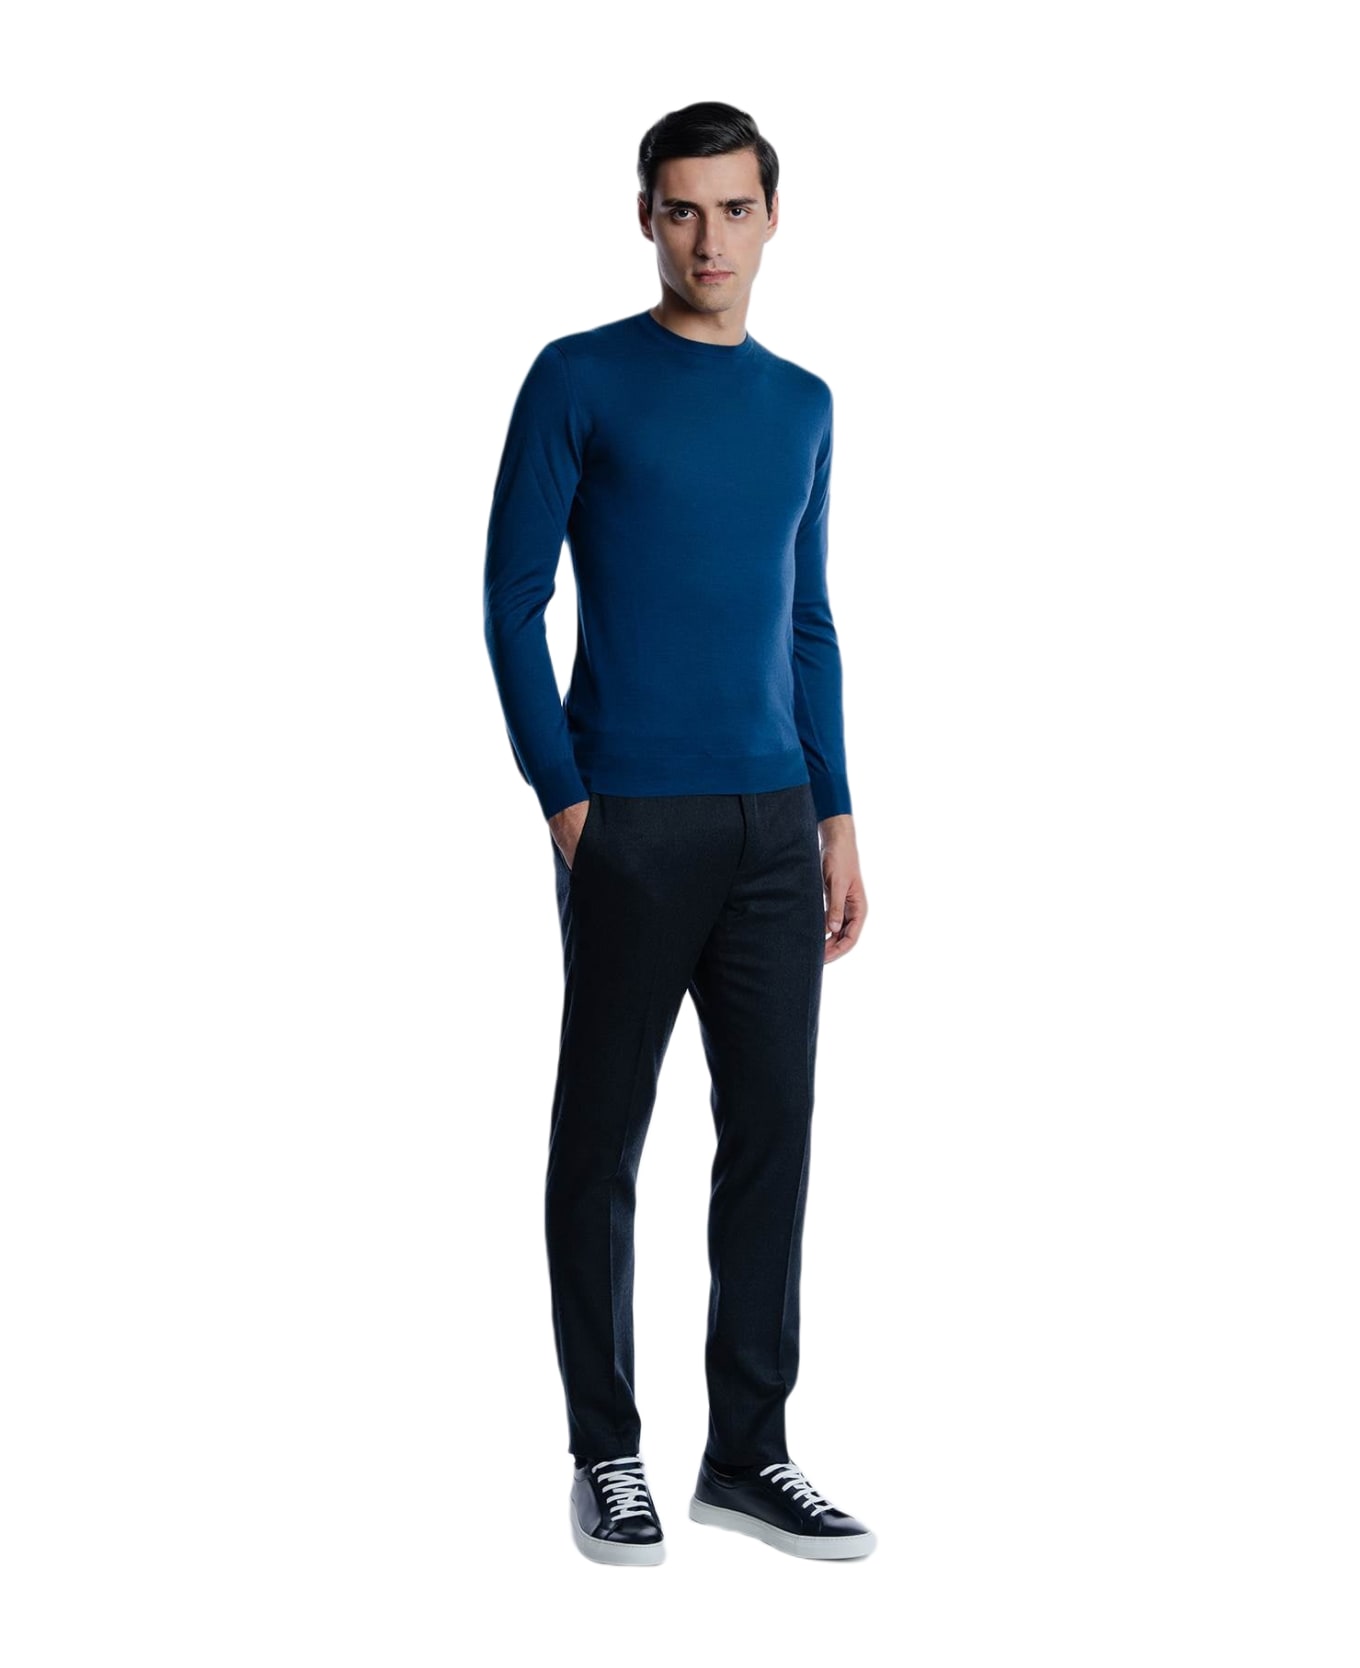 Larusmiani Sweater 'pullman' Sweater - Blue